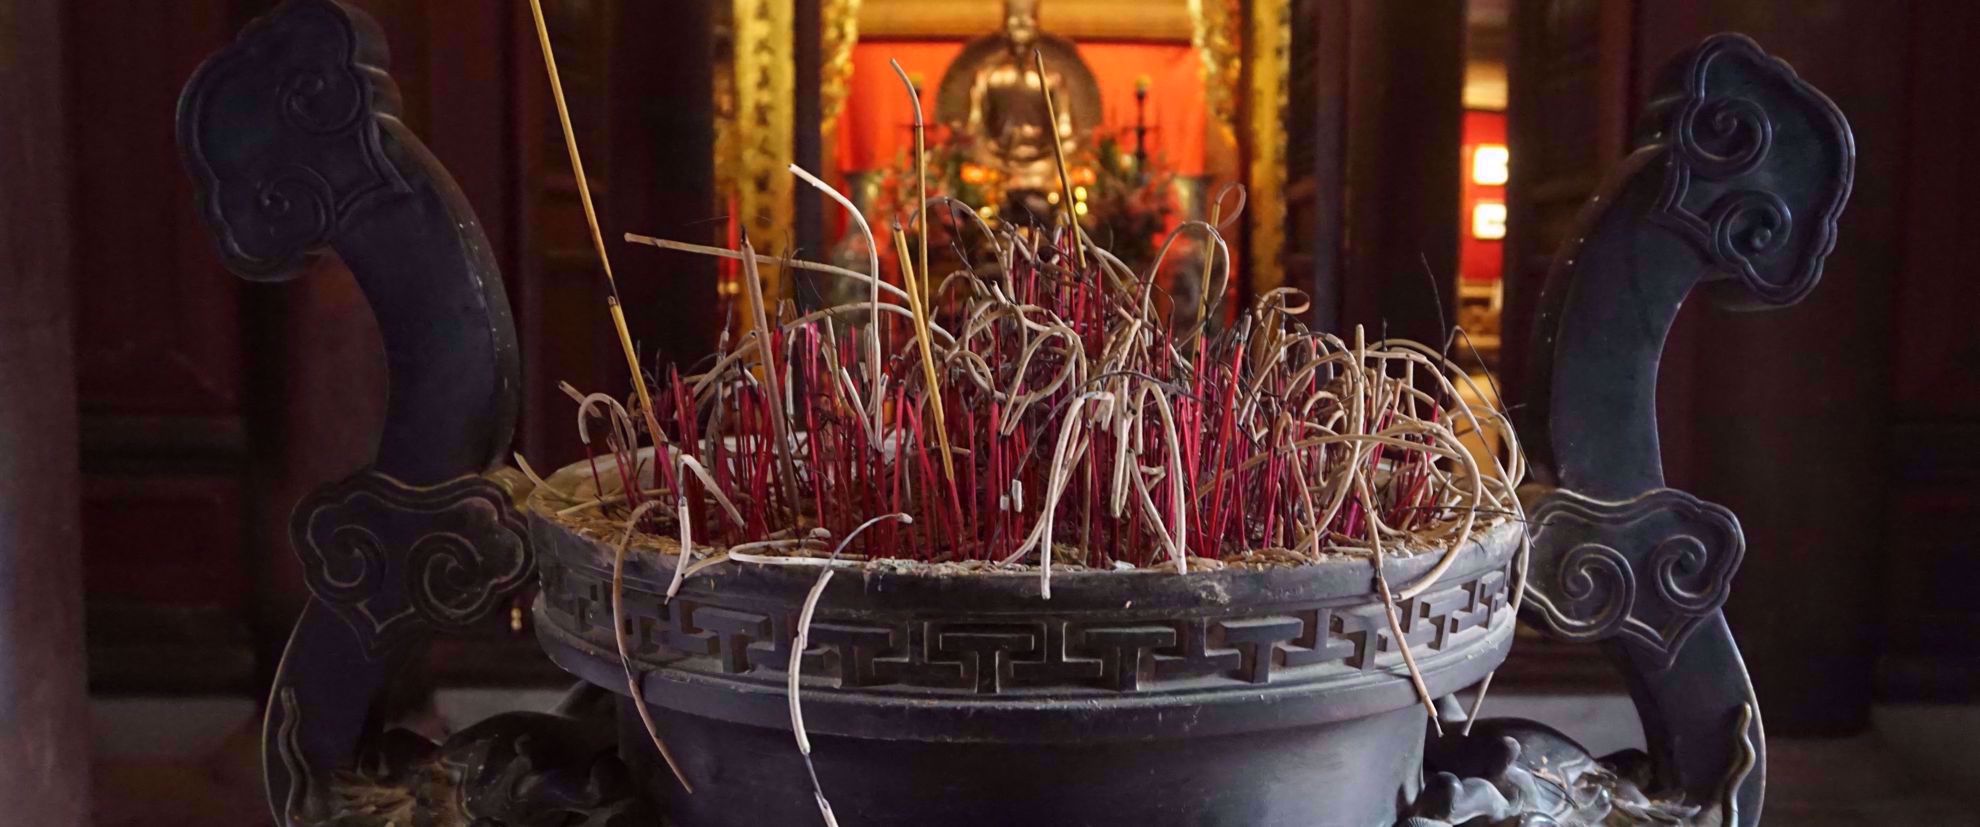 incense bowl in cambodia